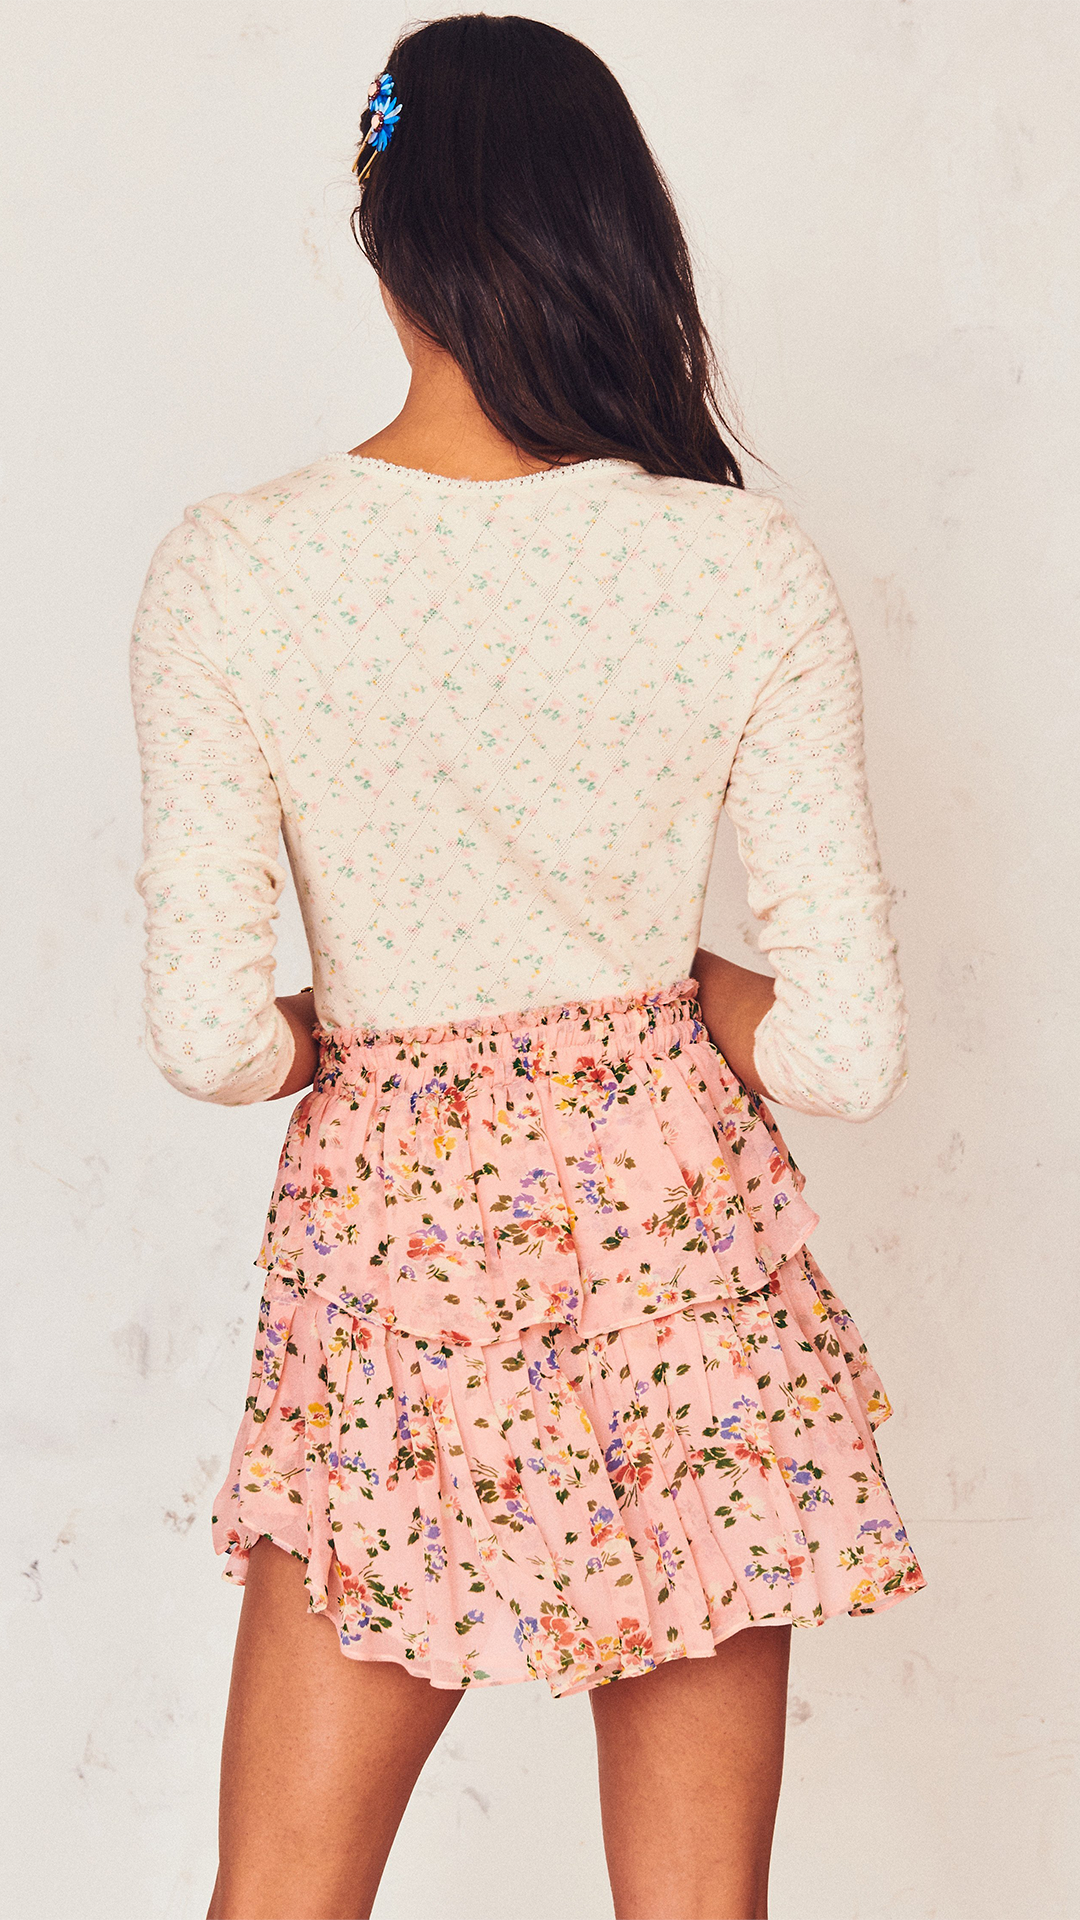 Ruffle Mini Skirt - ONFEMME By Lindsey's Kloset